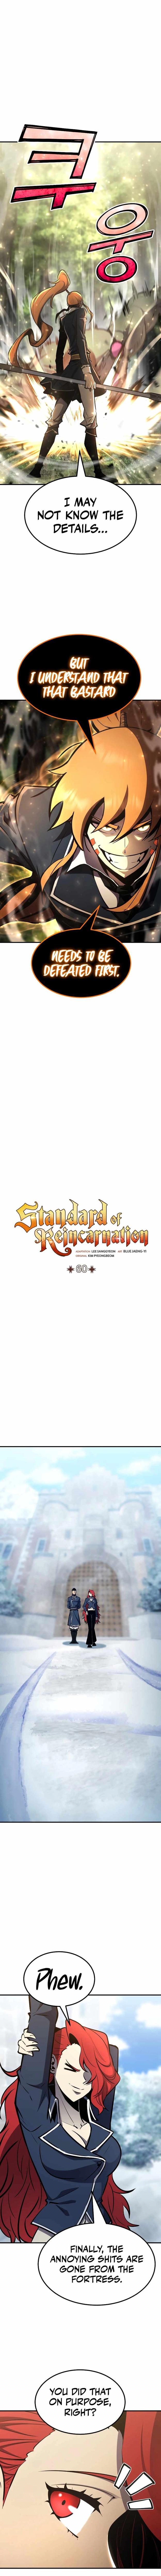 Standard of Reincarnation Chapter 60